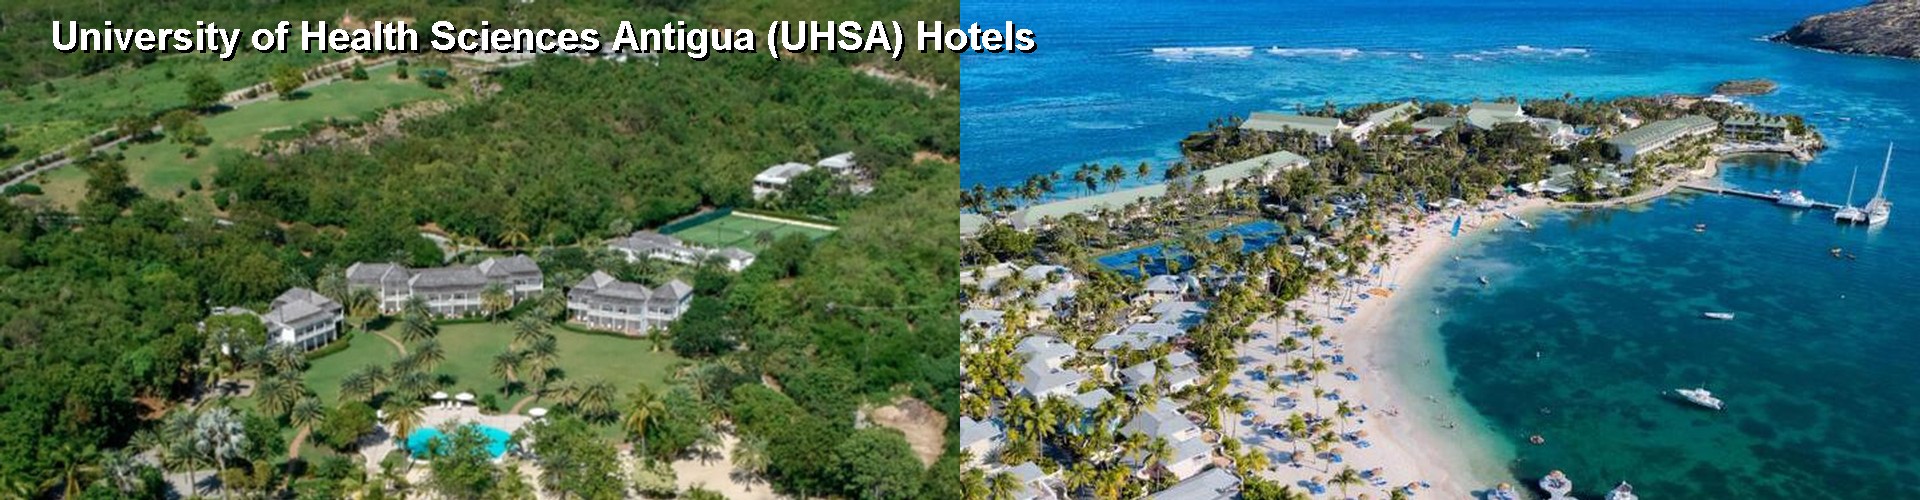 5 Best Hotels near University of Health Sciences Antigua (UHSA)